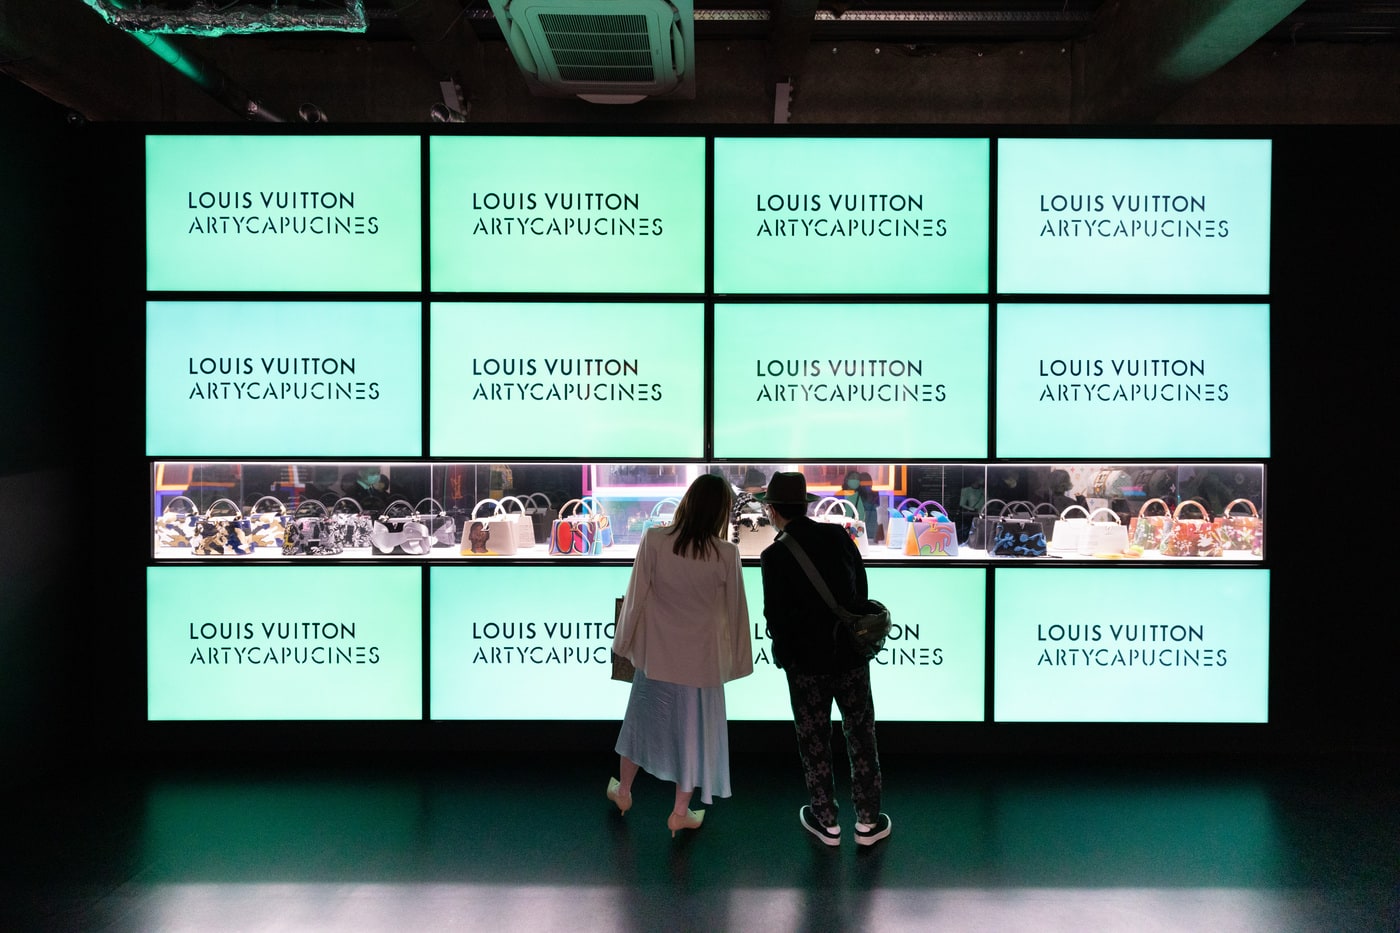 exploring the new @louisvuitton store ✨ #davet